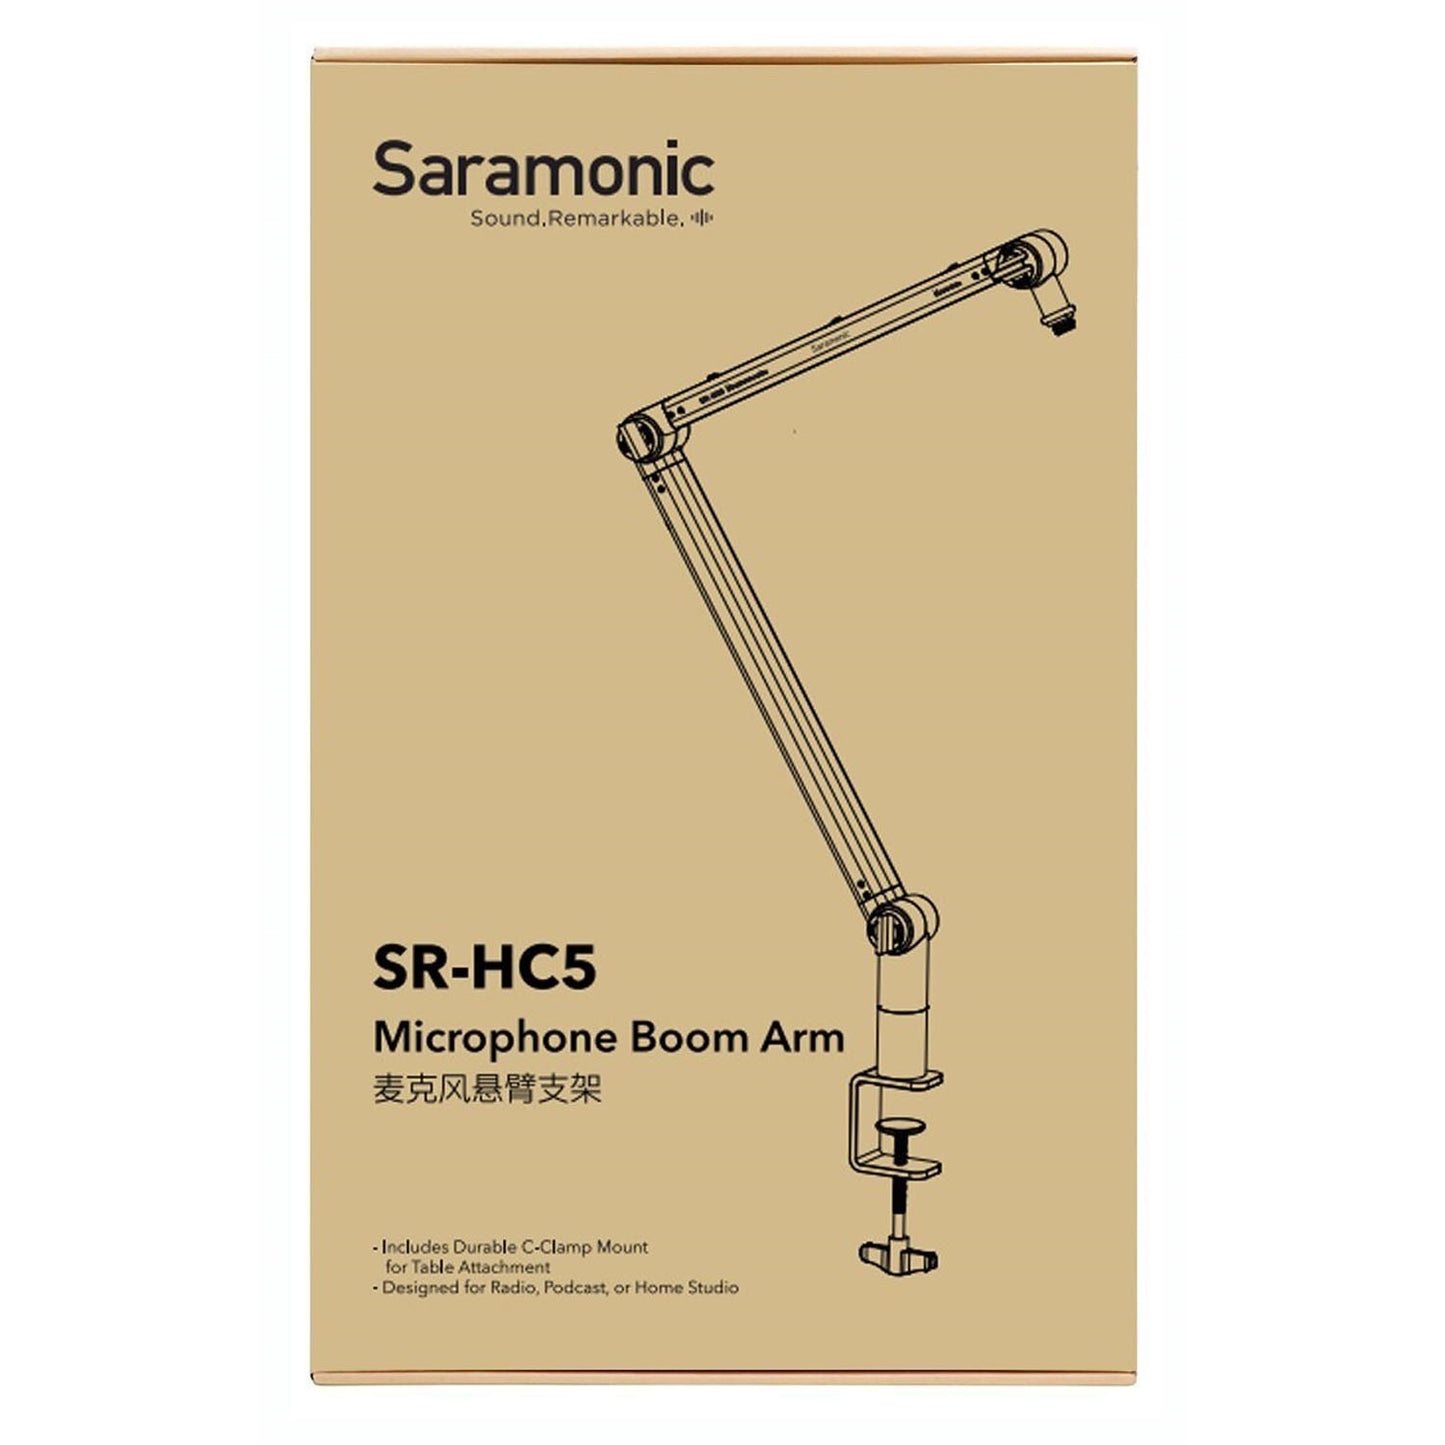 Saramonic SR-HC5 Microphone Boom Arm Aluminum Alloy Construction with C-Clamp Mount, Adjustable Hinge, 3/8" 5/8" Mic Mount Adapter